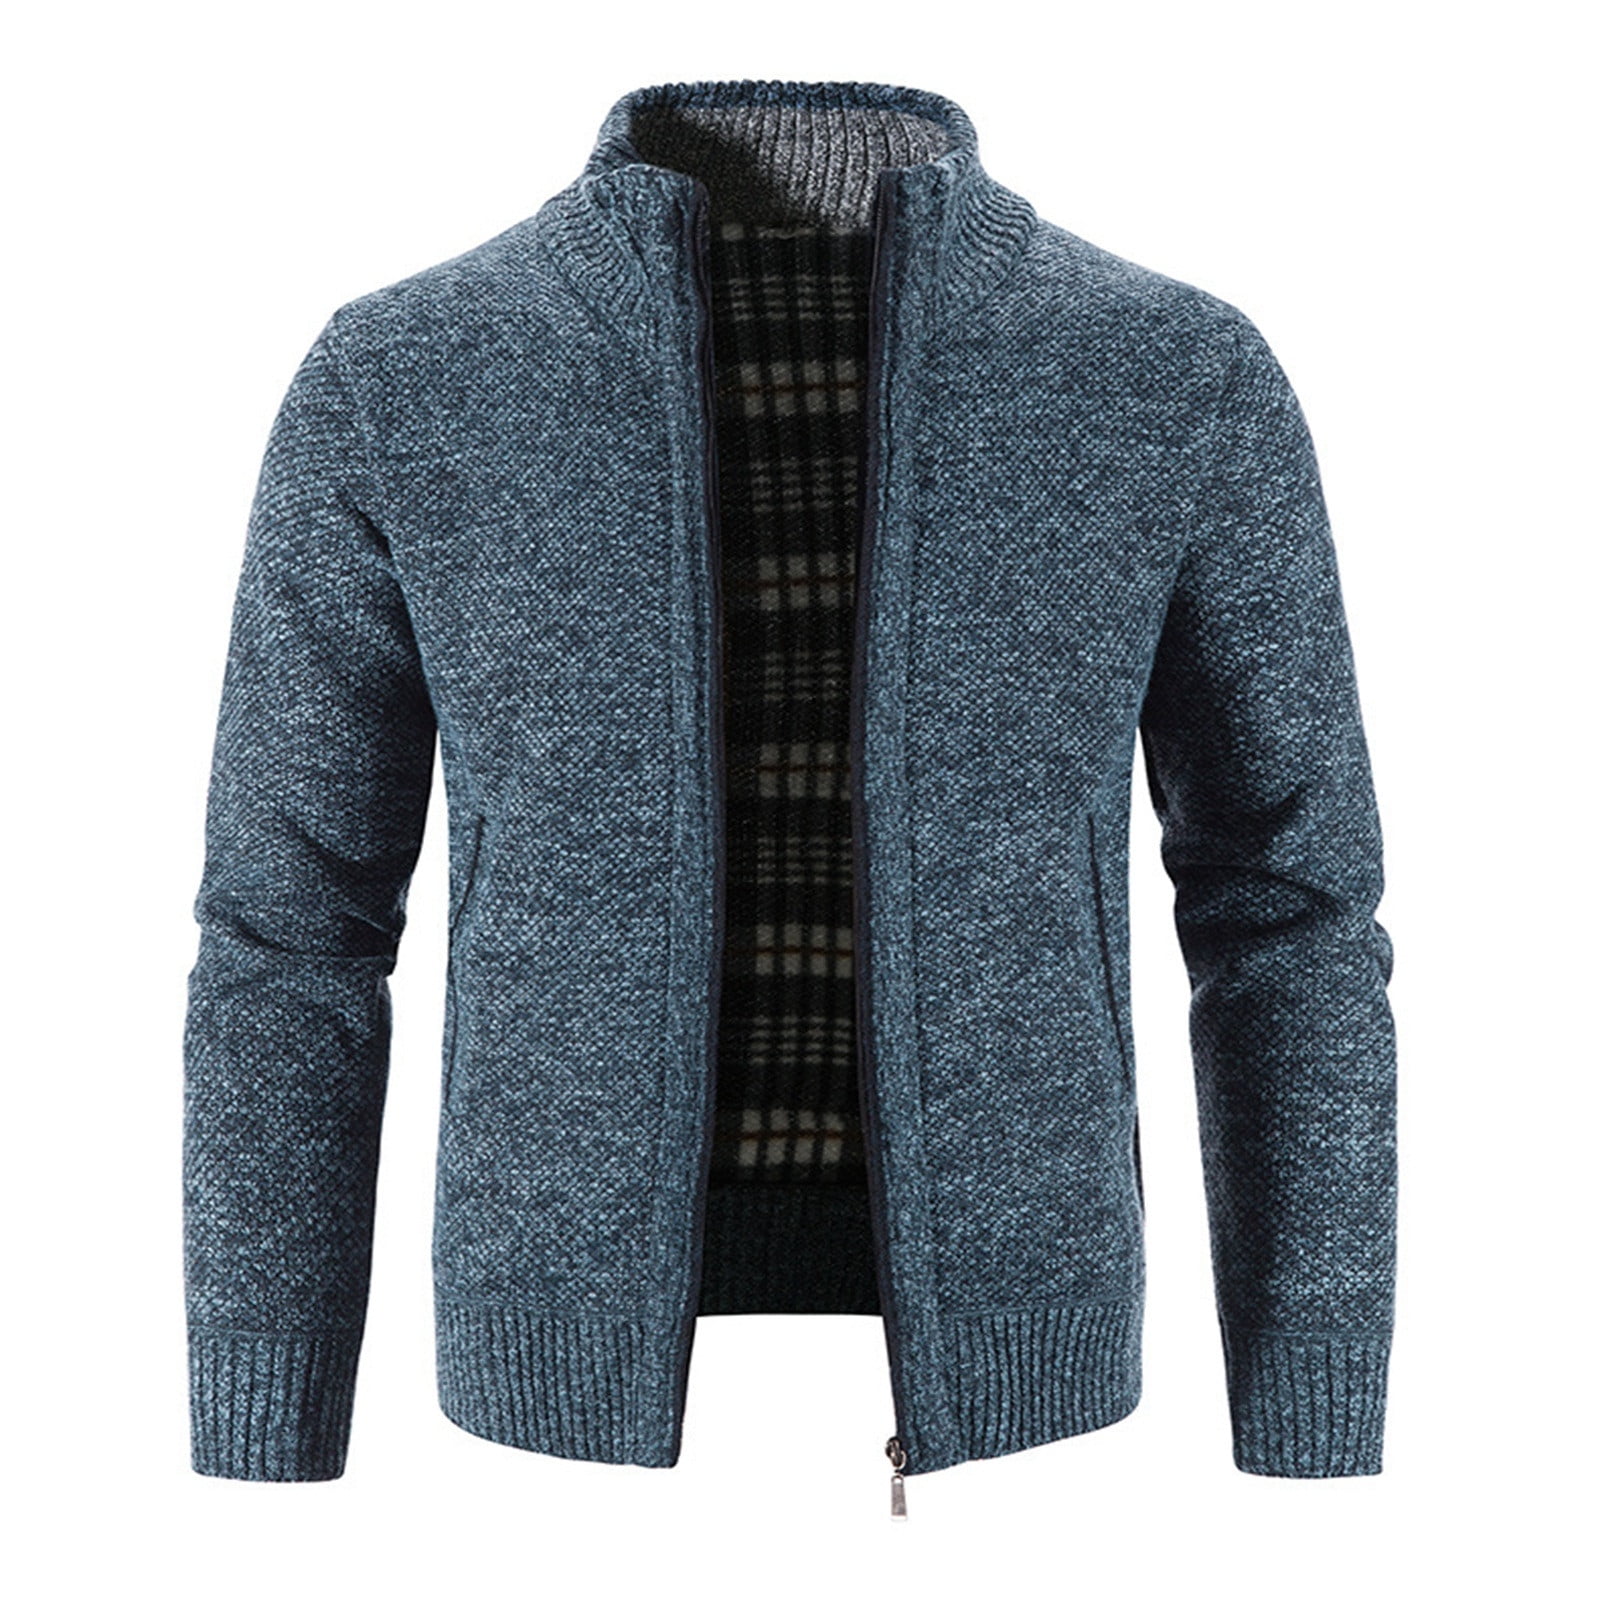 Ikevan Mens Winter Turtleneck Zipper Long Sleeve Knitted Sweater Top ...